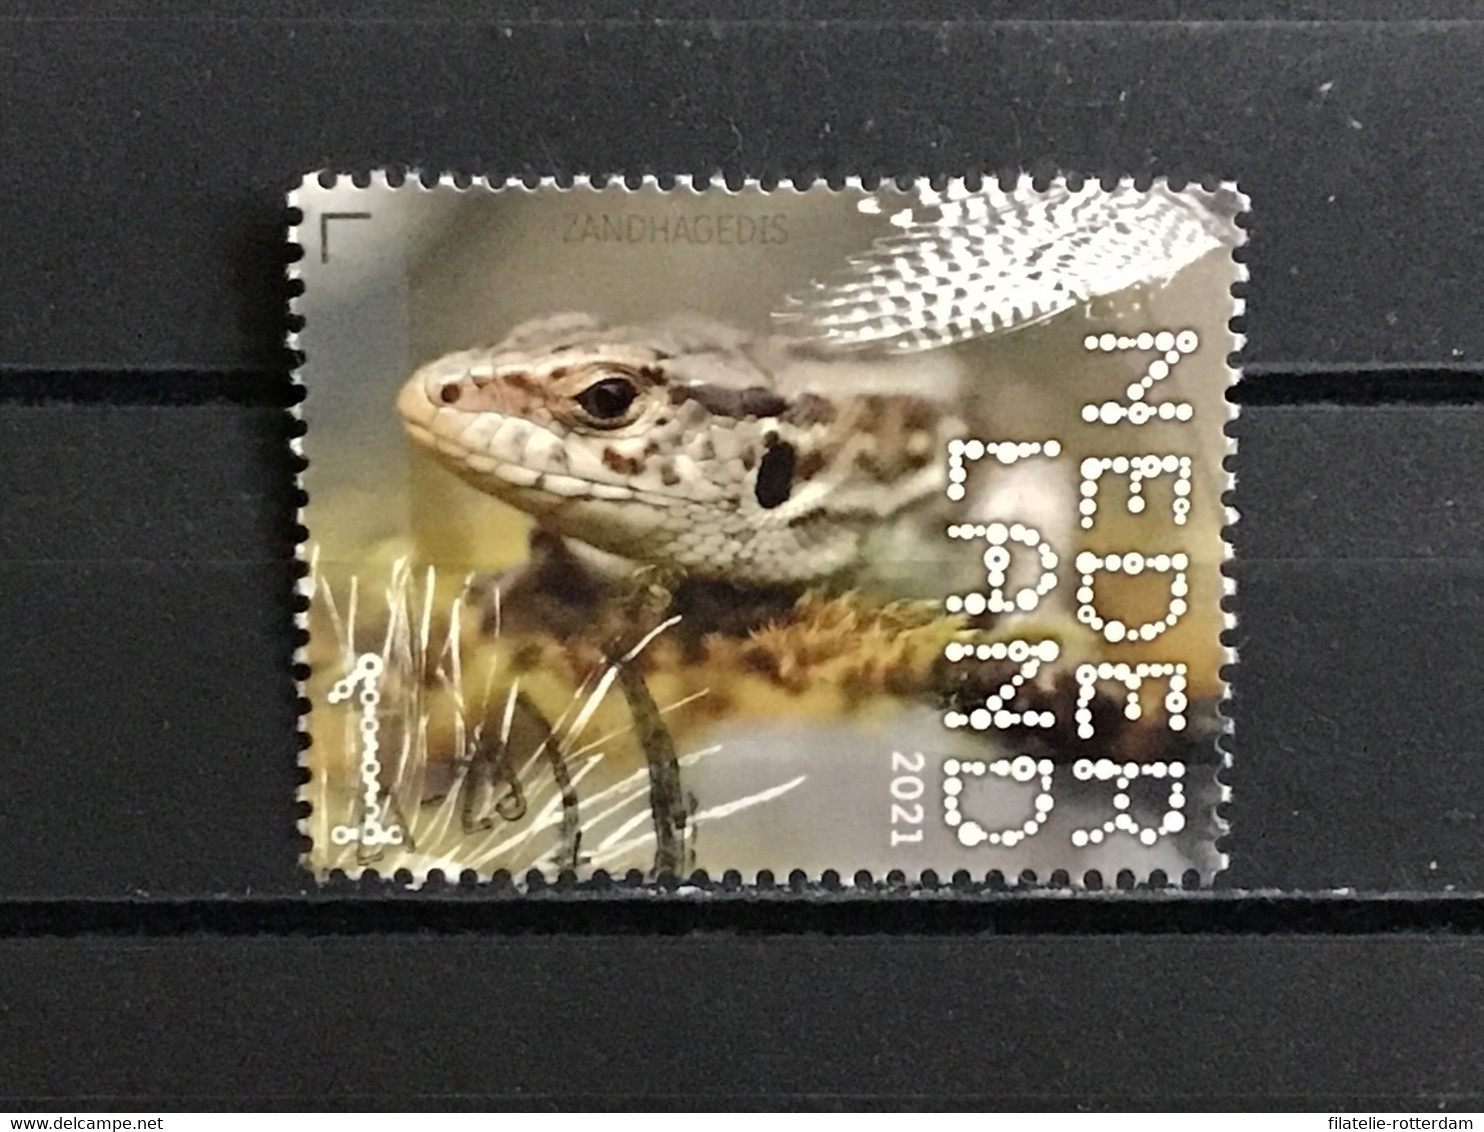 Nederland / The Netherlands - Zandhagedis 2021 - Used Stamps